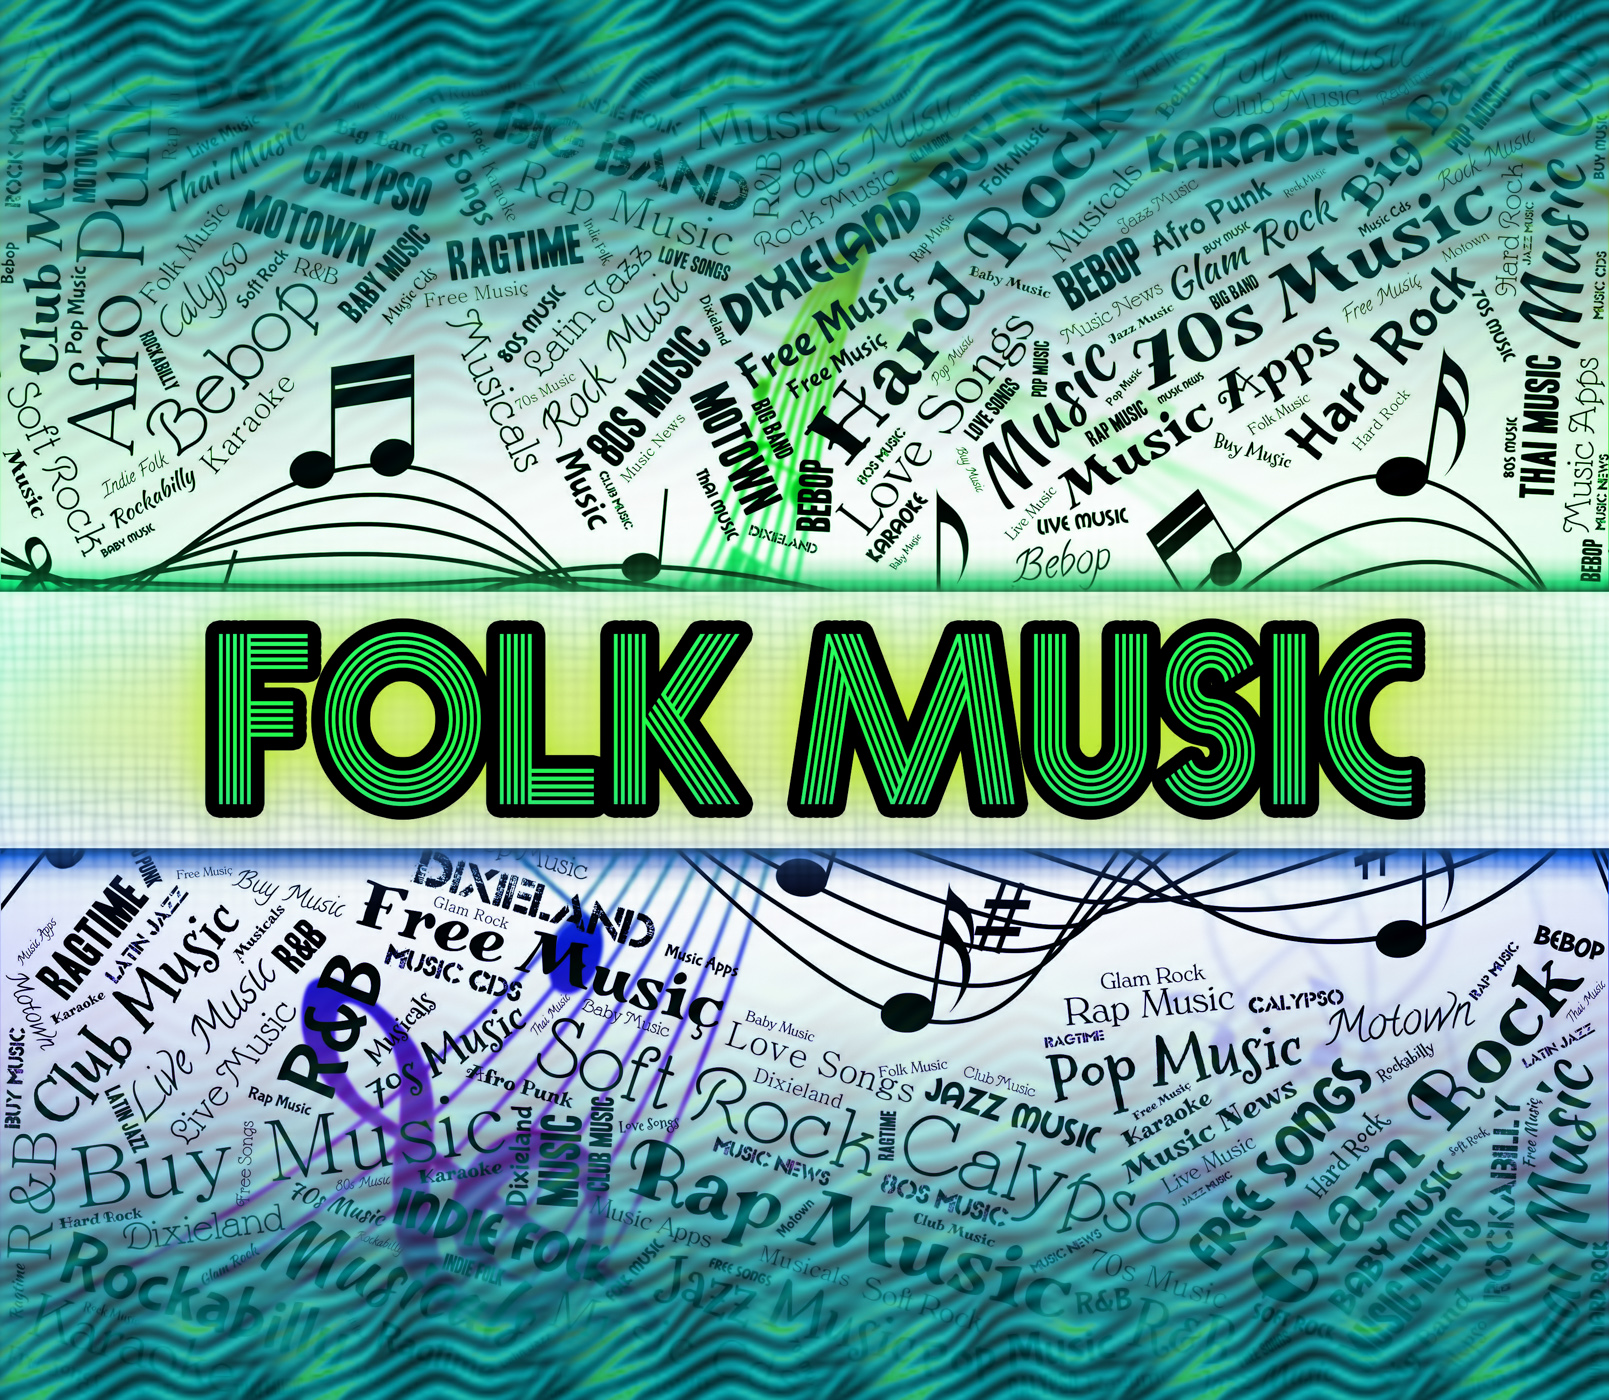 Folk music shows sound tracks and balladry photo